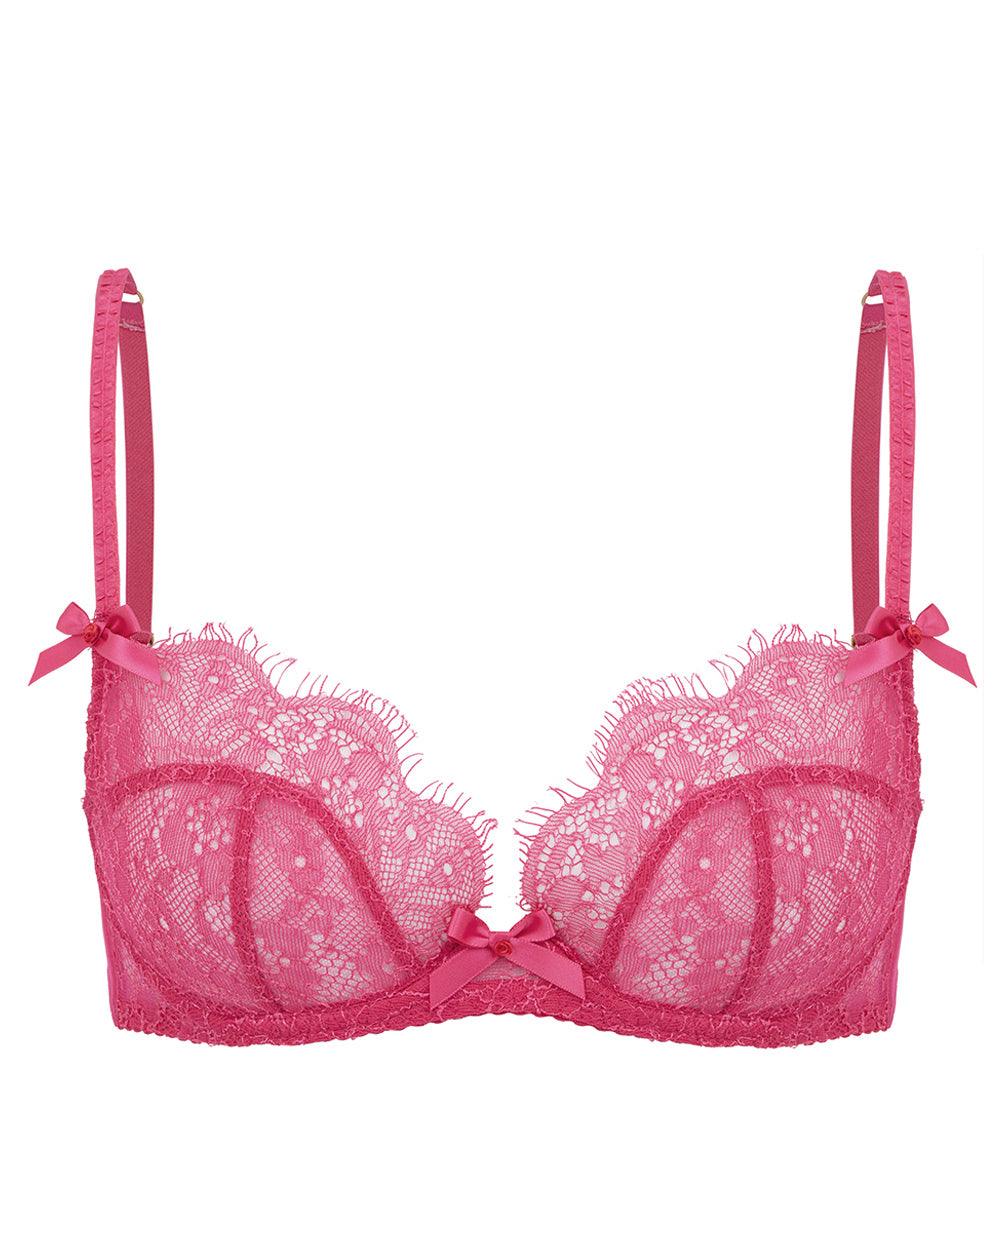 Victoria secret pink bra size 32c white lace push up  Victoria secret pink  bras, Pink bra, Victoria secret pink